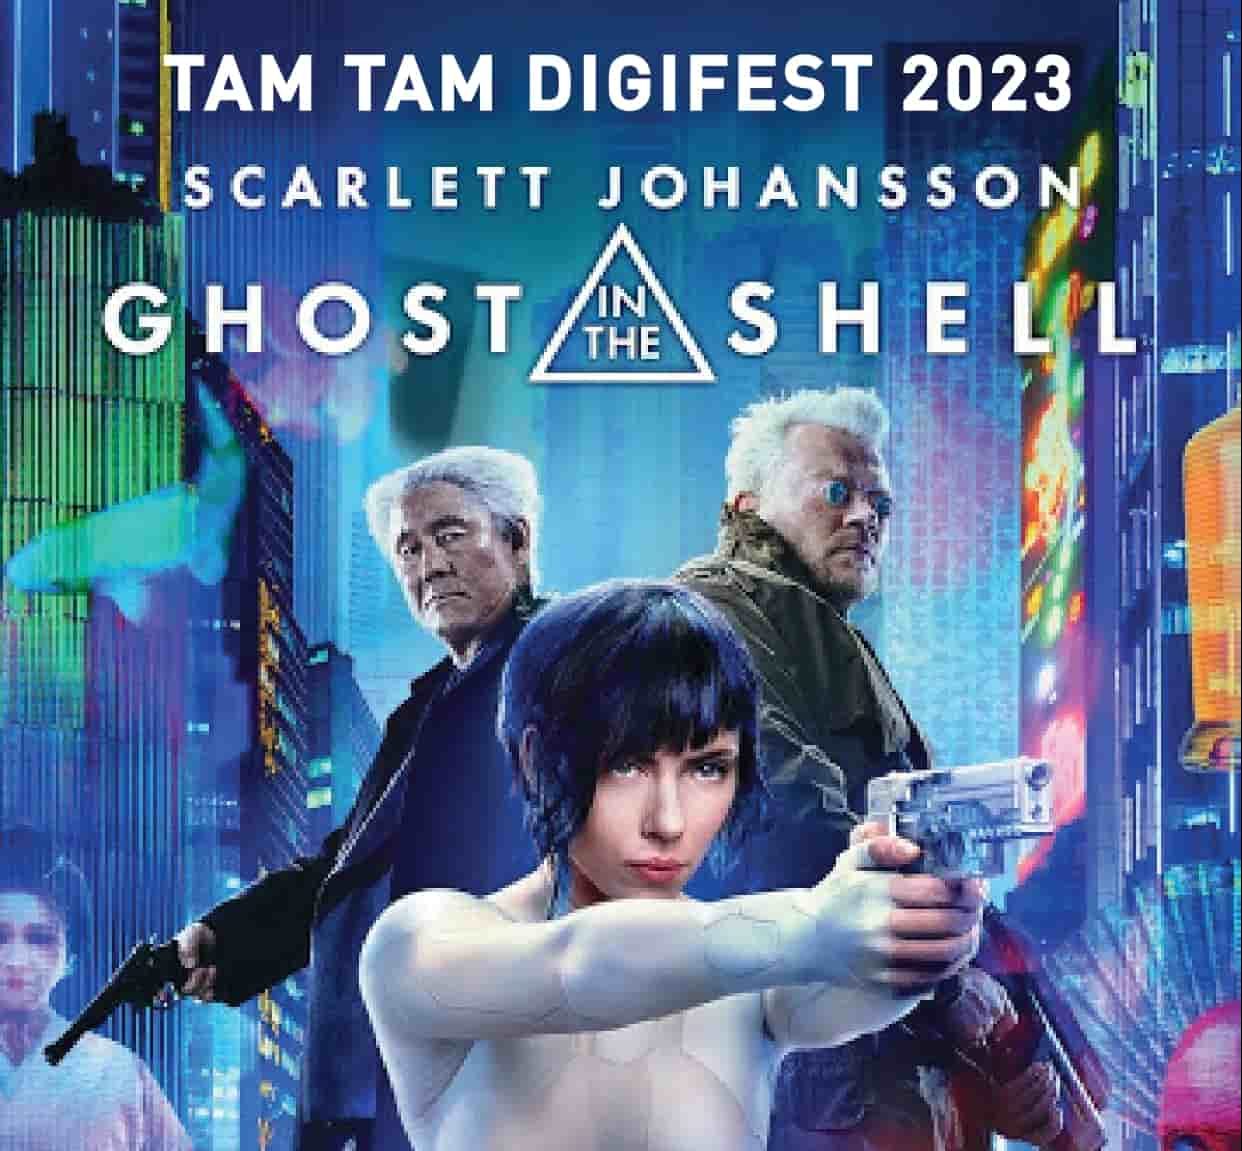 All’Auditorium Marillac Scarlett Johansson nel film “Ghost in the shell”